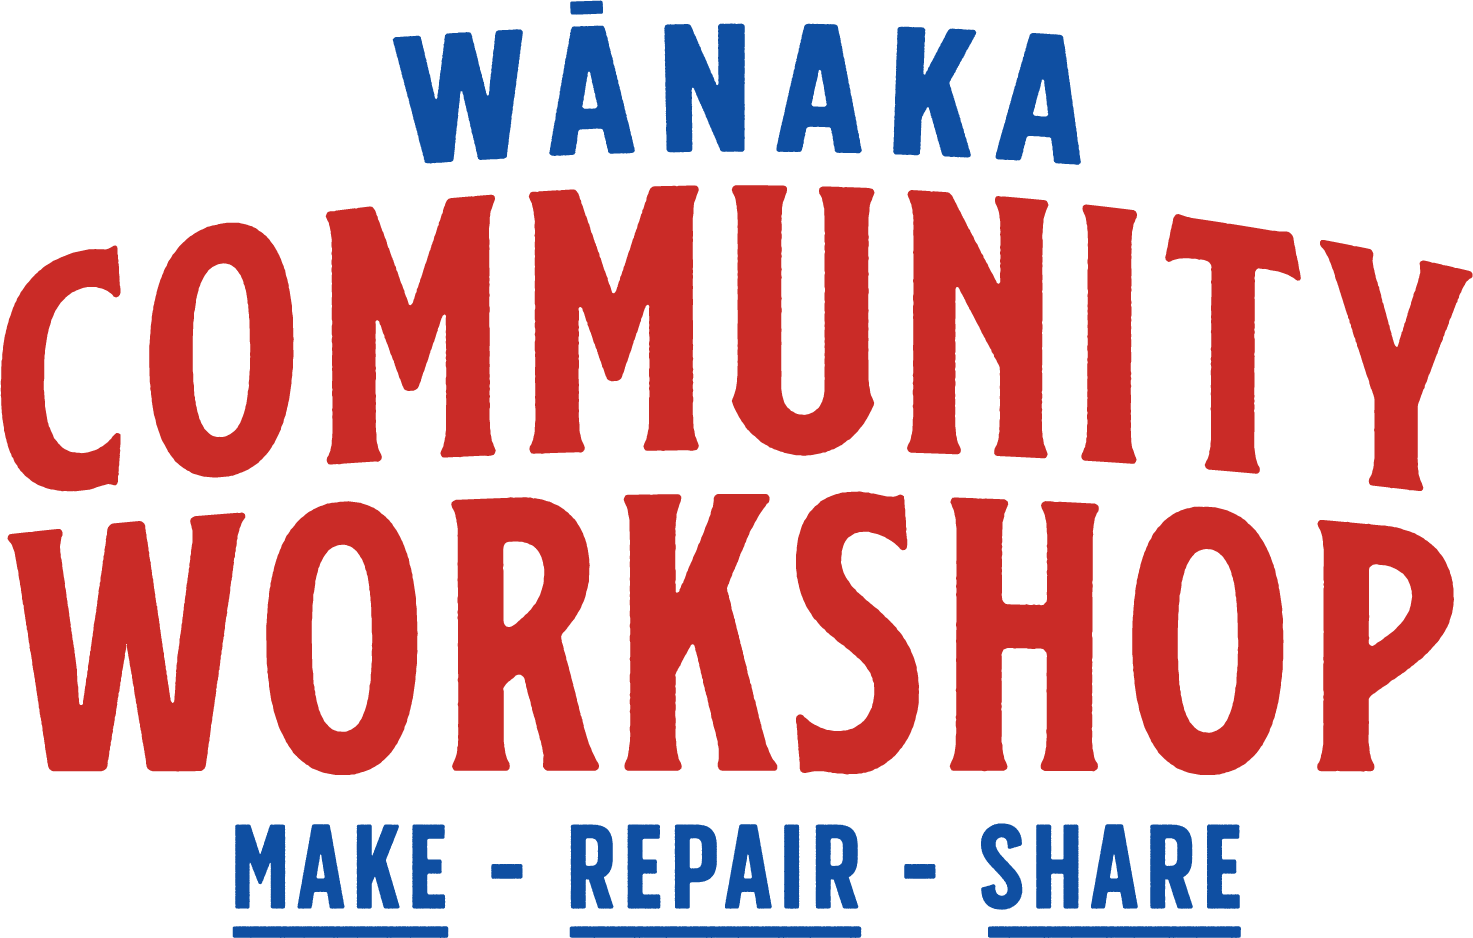 Wanaka Community Workshop